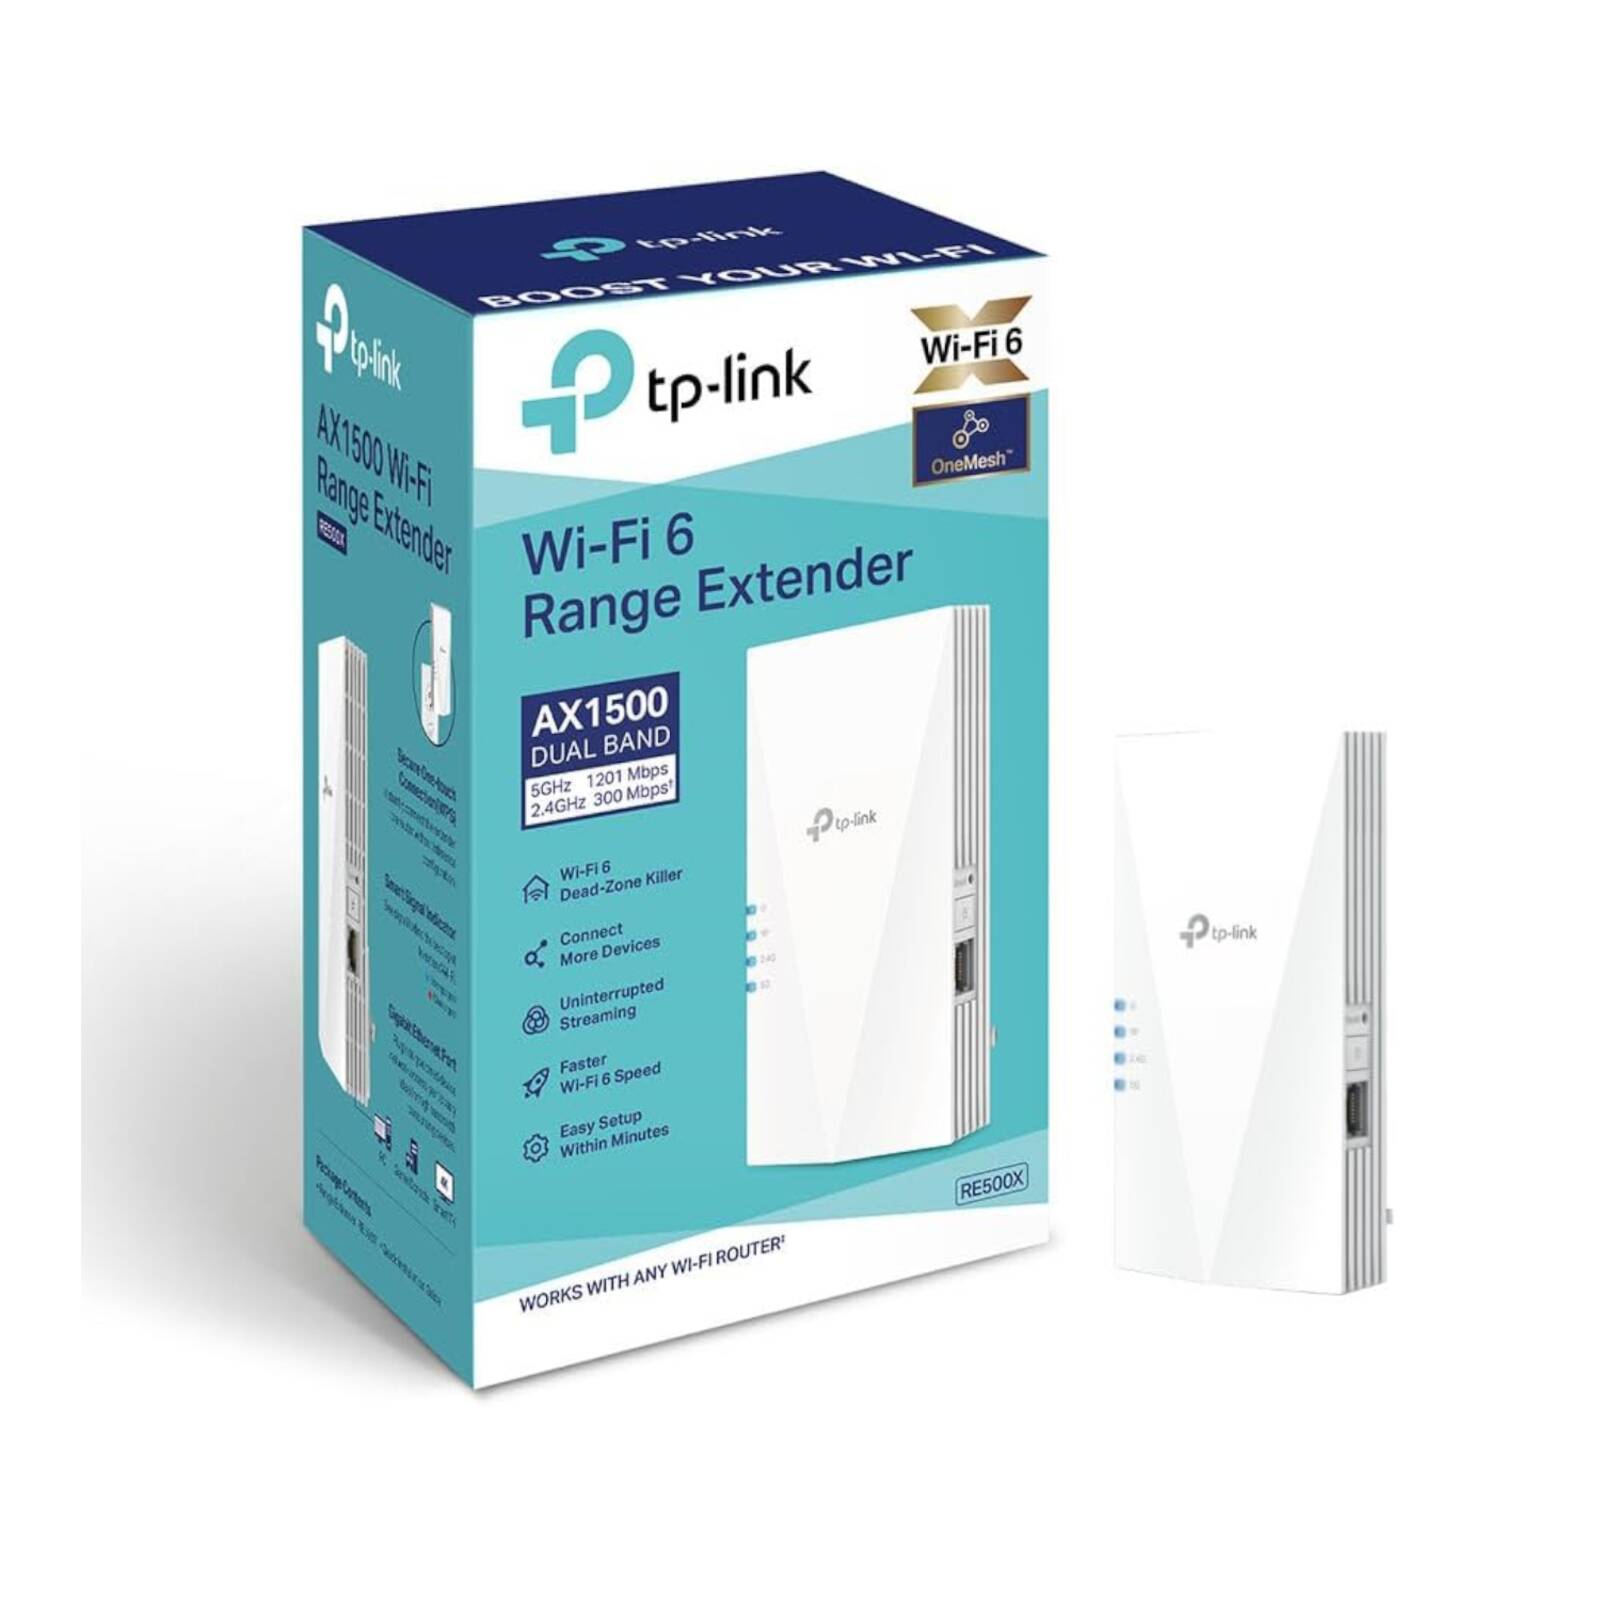 TP-LINK AX1500 (RE500X) Wi-Fi 6 Dual Band Wall-Plug Range Extender